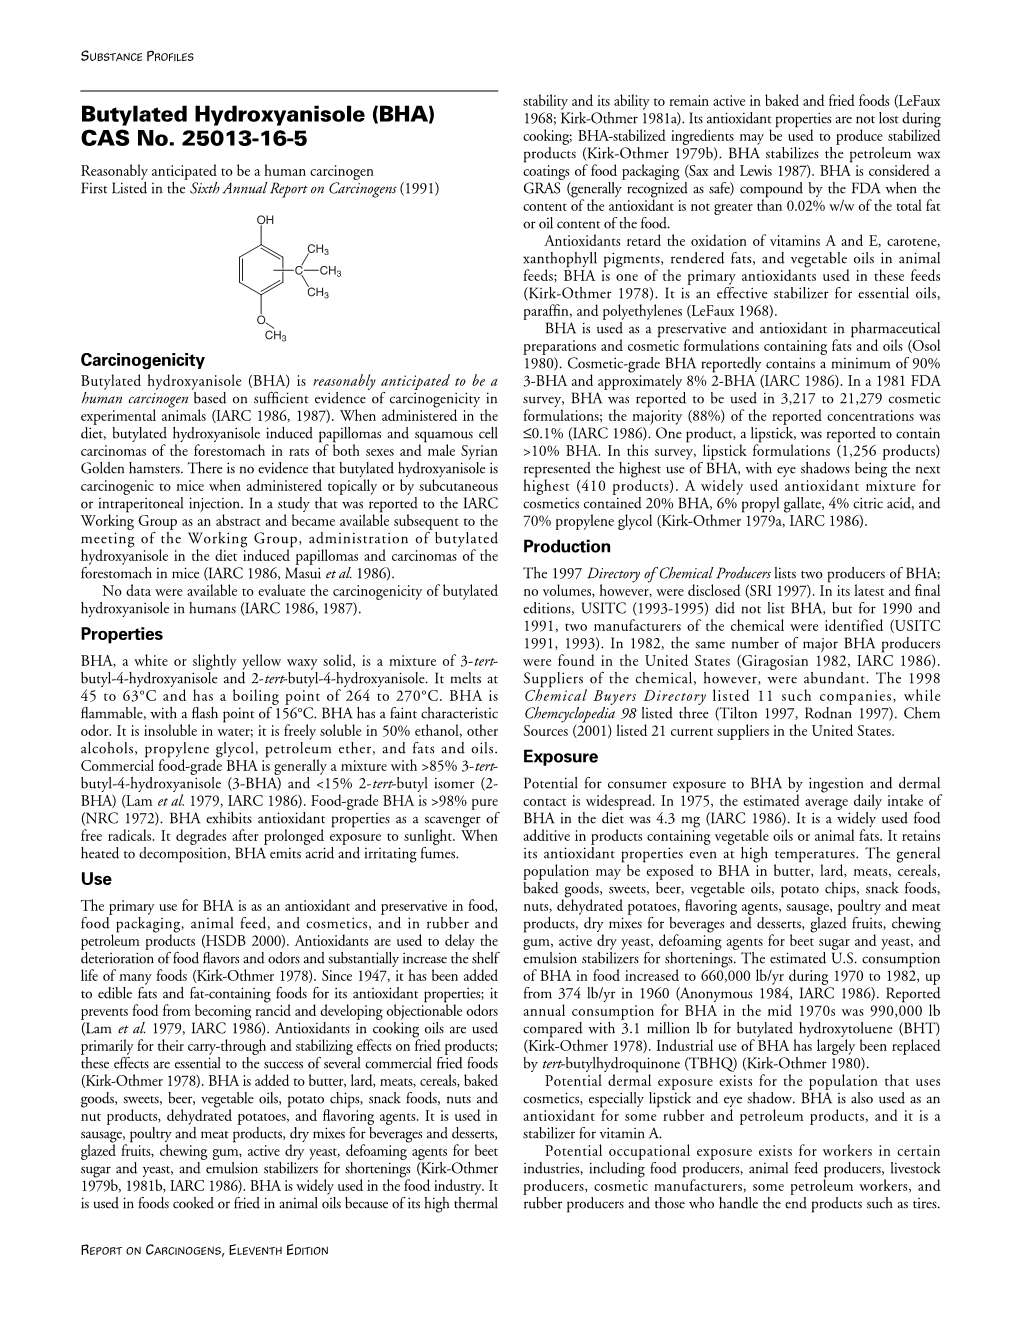 Butylated Hydroxyanisole (BHA) 1968; Kirk-Othmer 1981A)